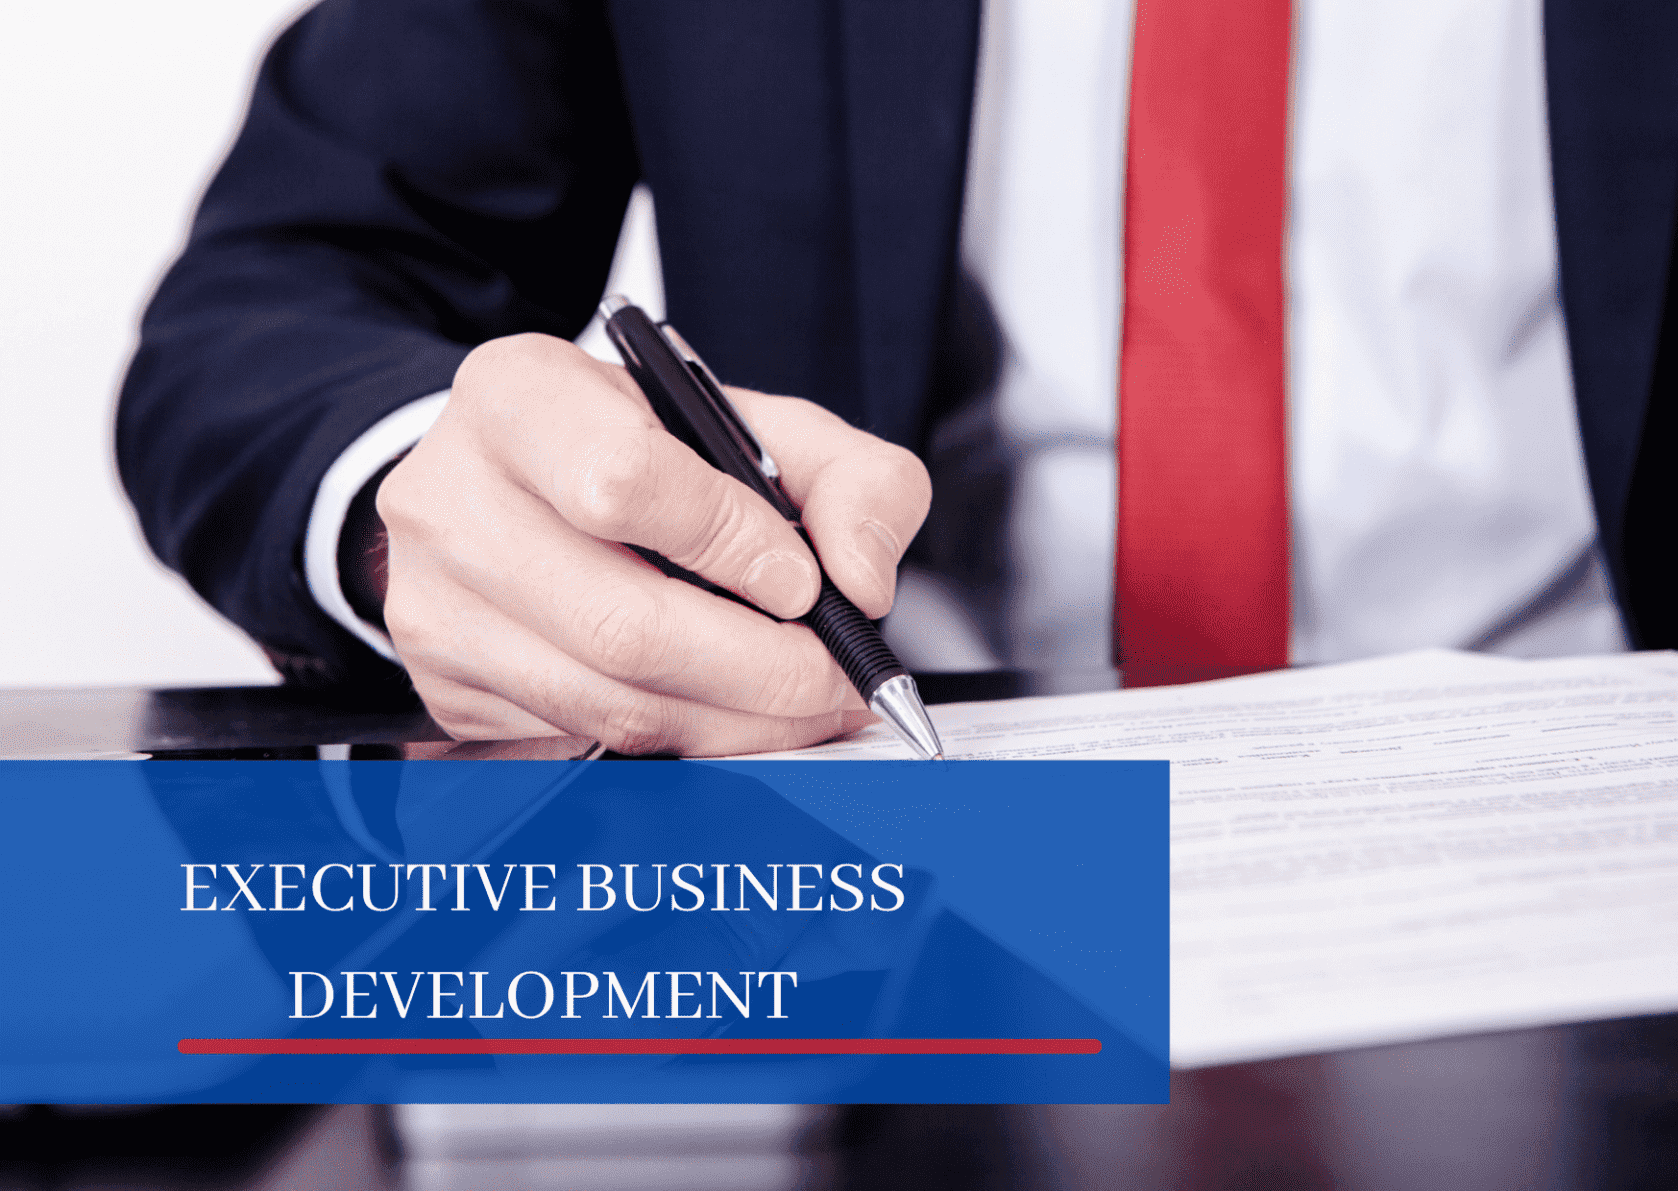 Executive business development